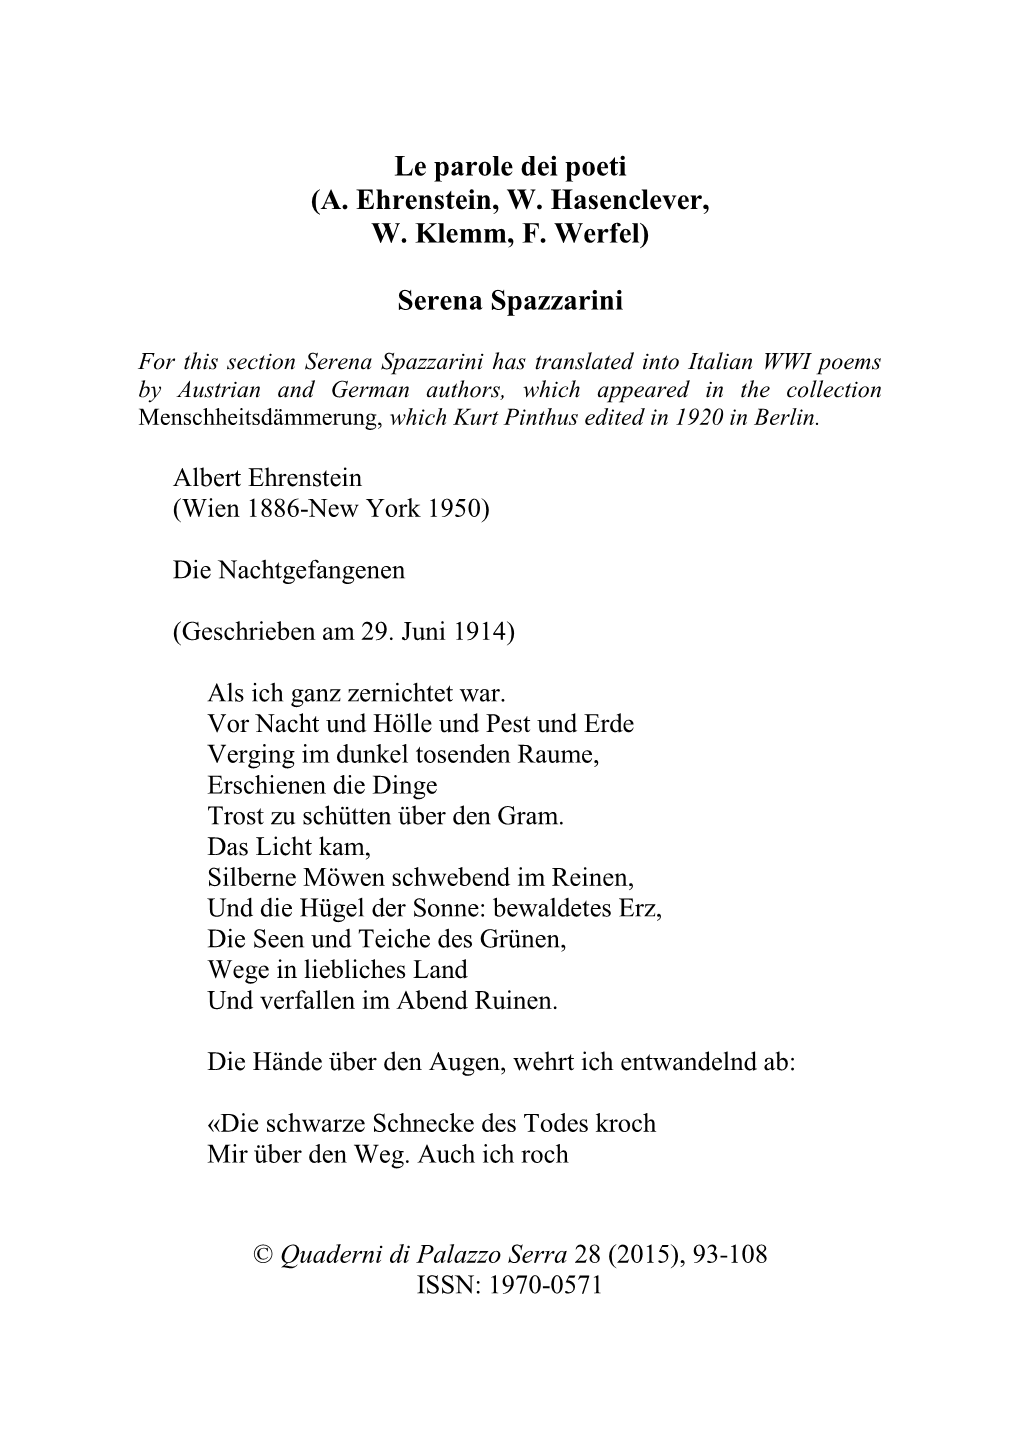 Le Parole Dei Poeti (A. Ehrenstein, W. Hasenclever, W. Klemm, F. Werfel) Serena Spazzarini